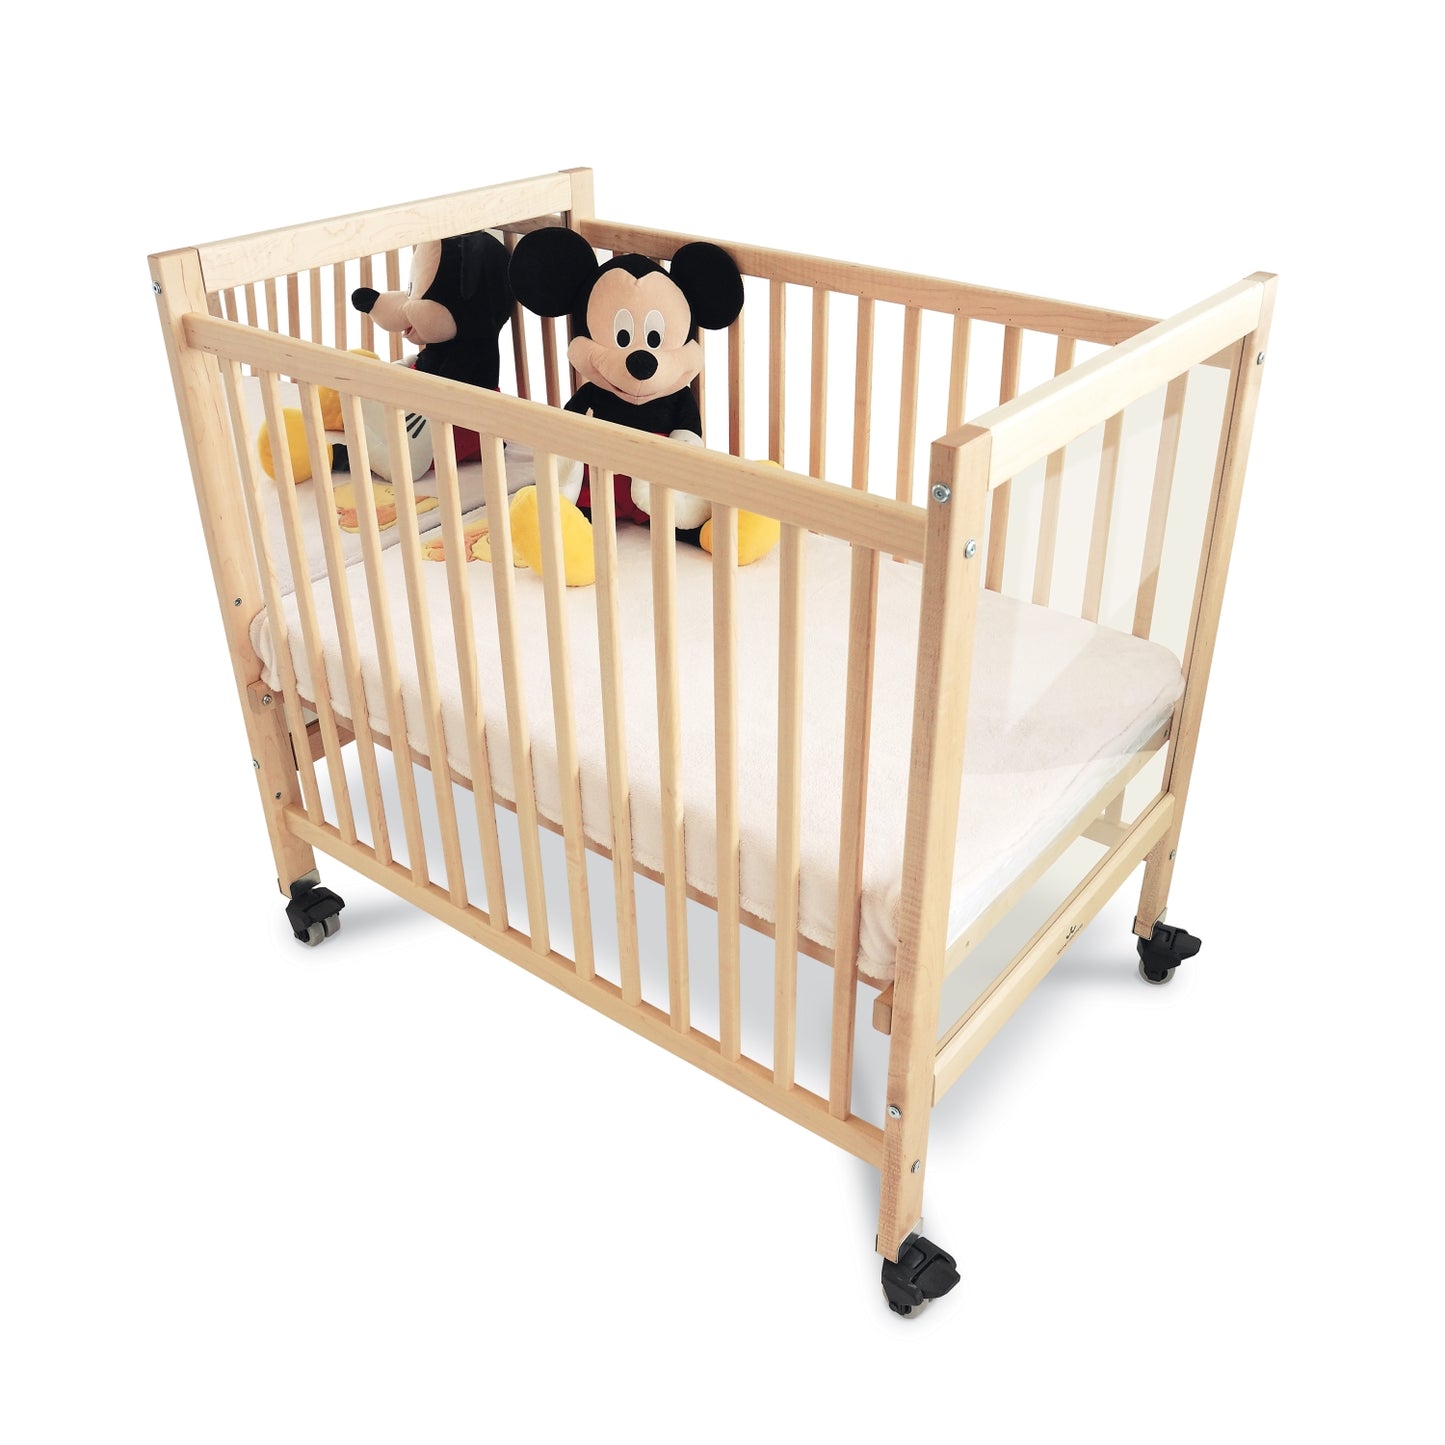 I-See-Me Infant Crib